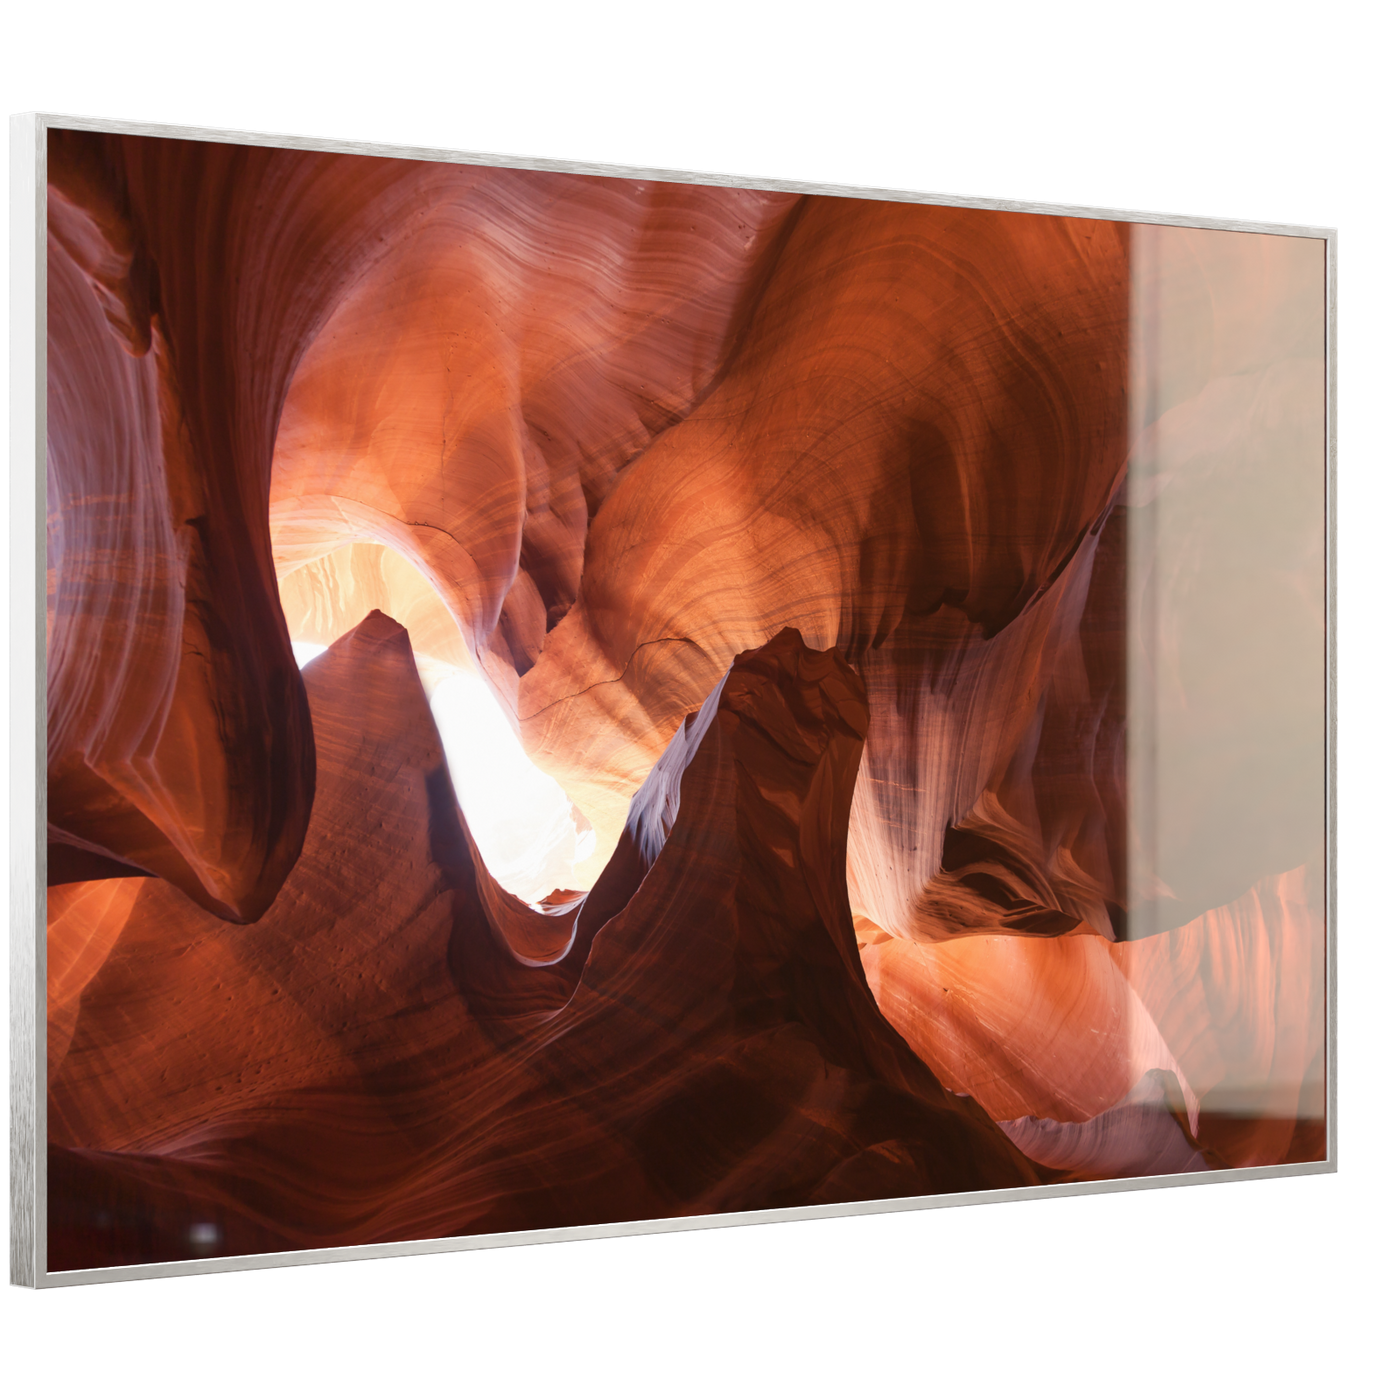 STEINFELD Deko Glas Wandbild Motiv 054 Canyon